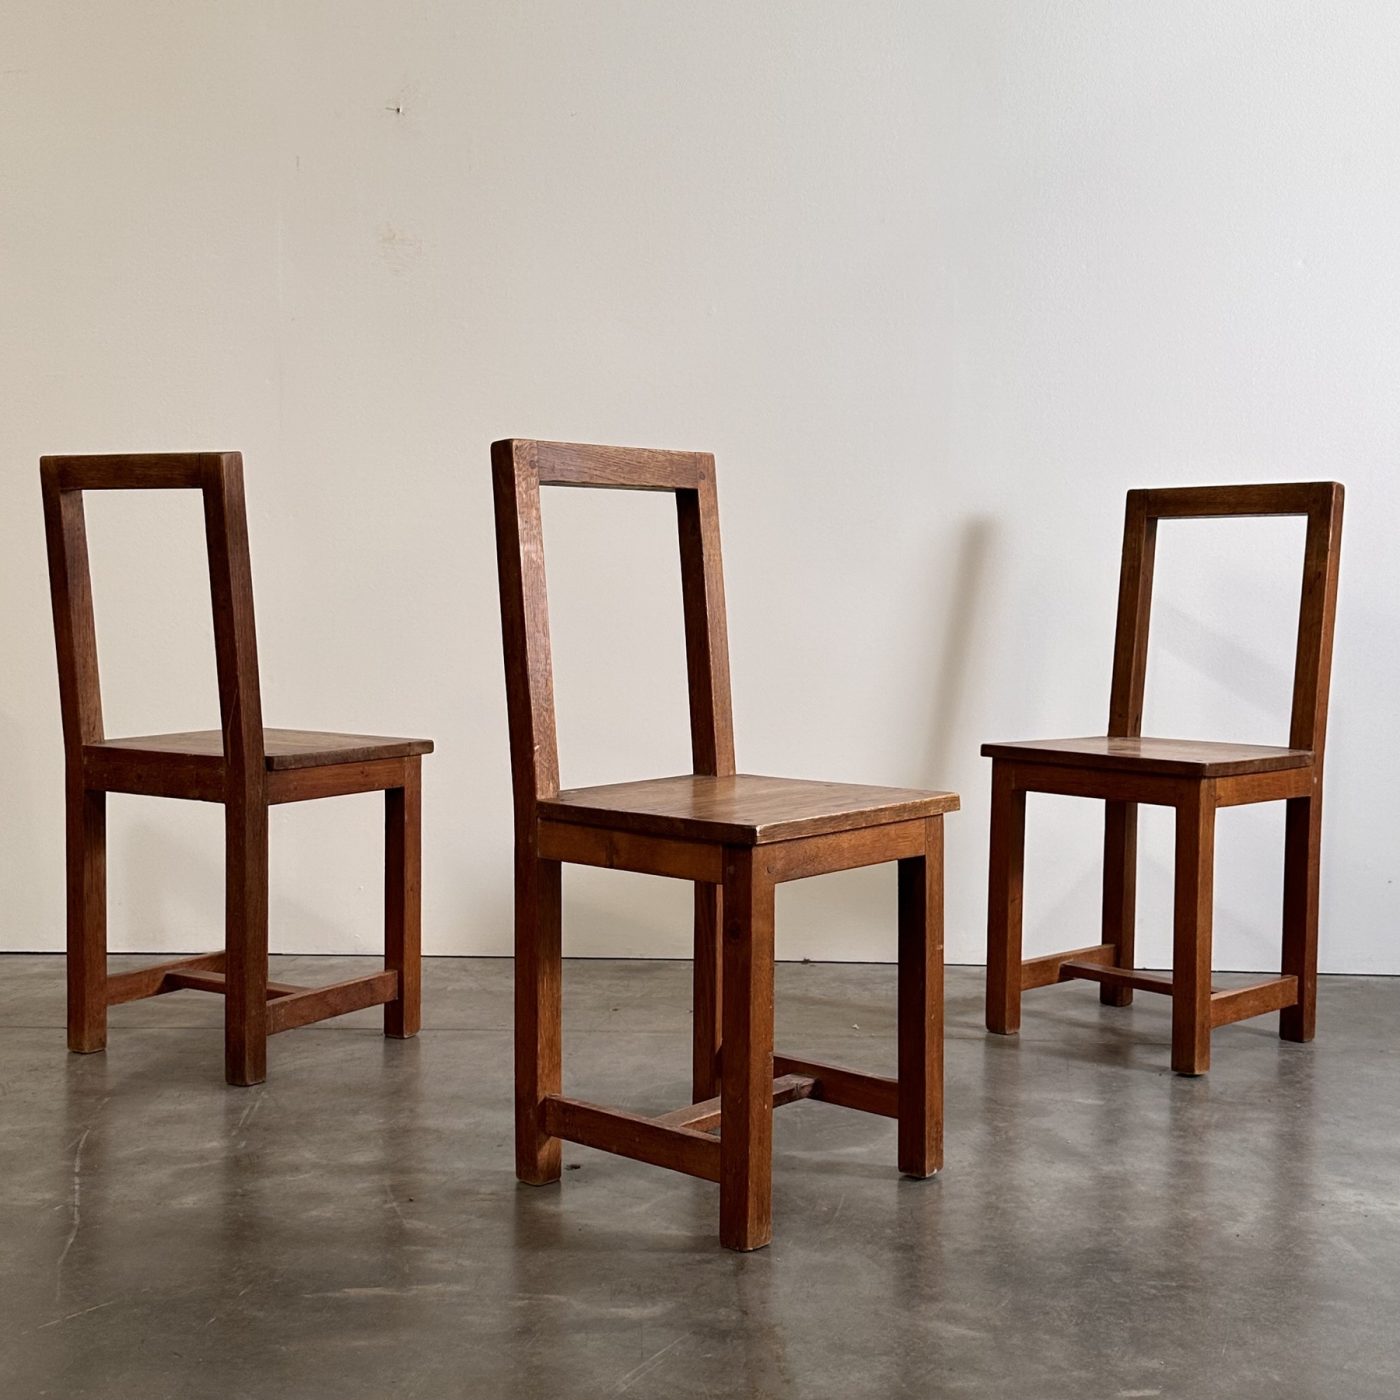 objet-vagabond-simple-chairs0006